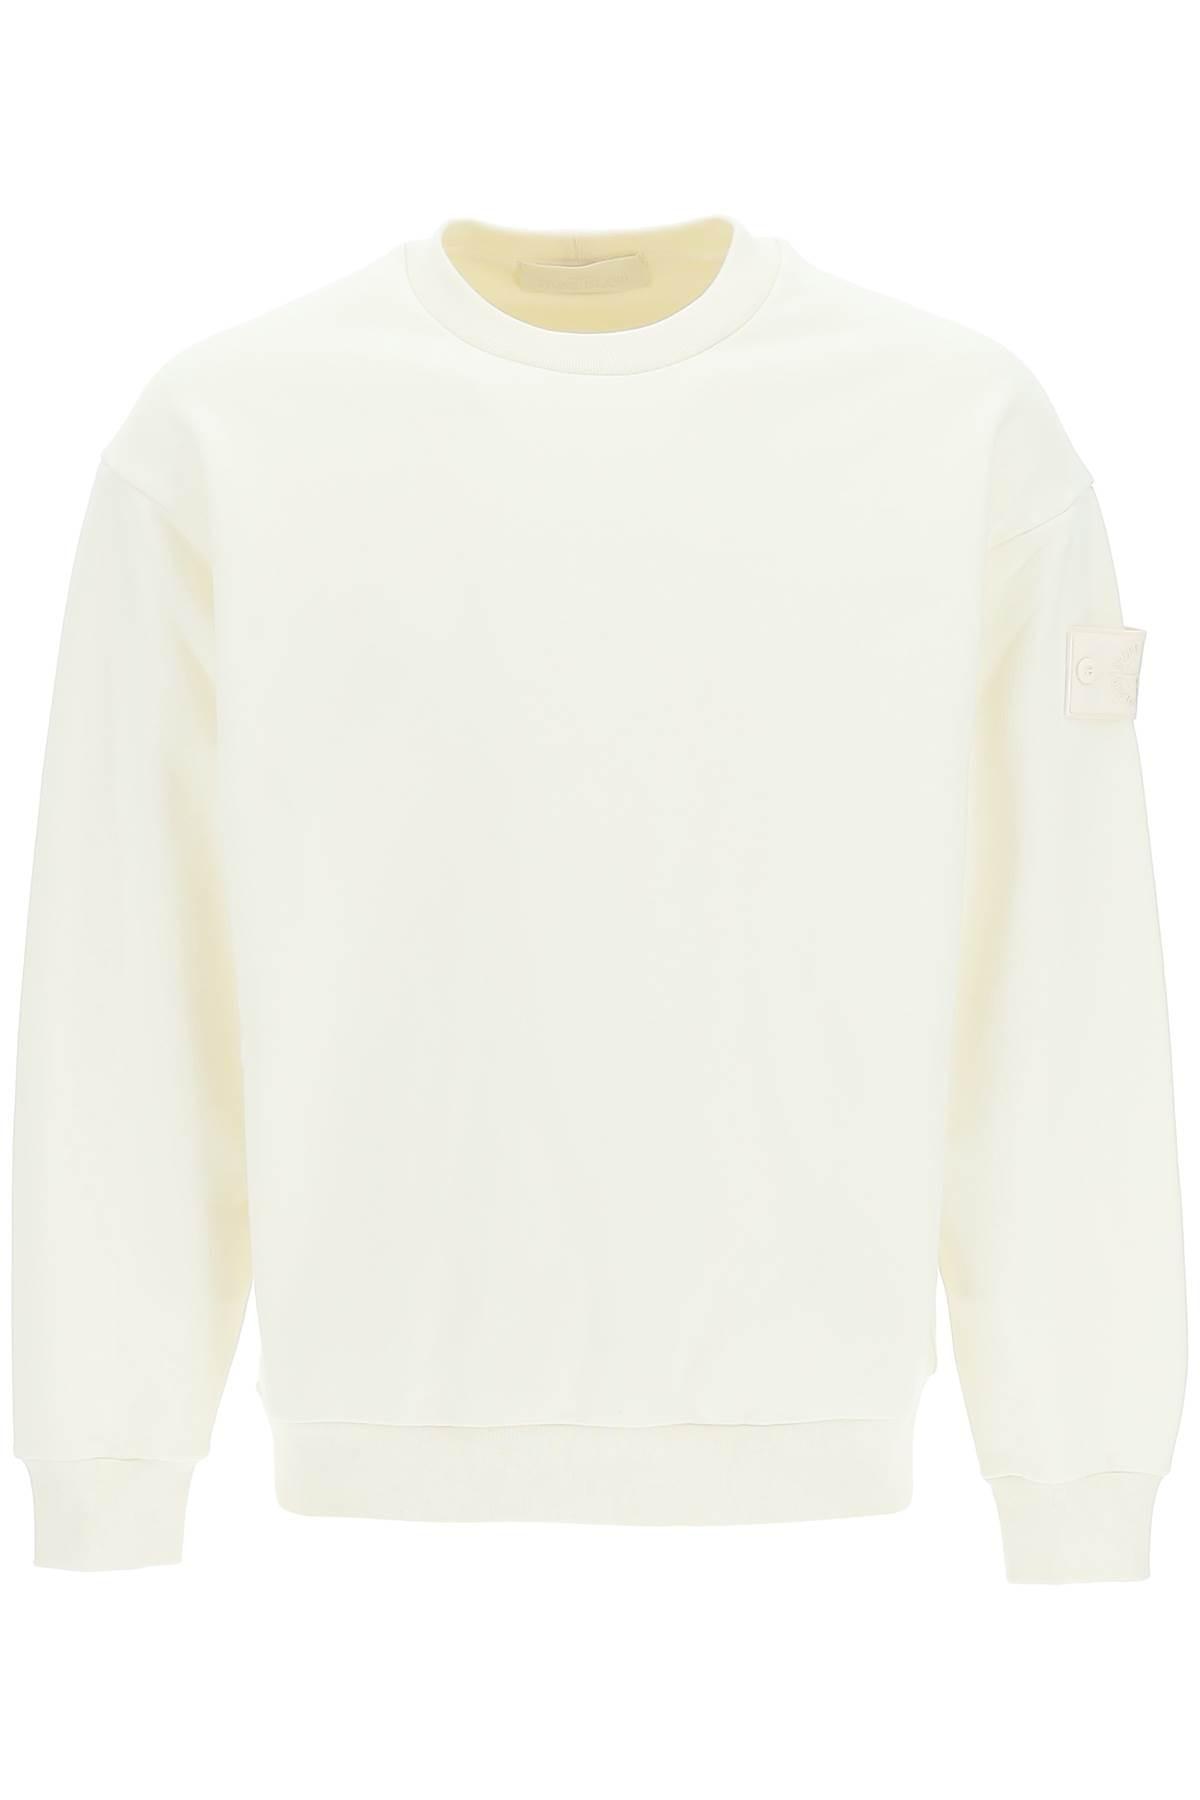 Stone Island Ghost Piece Sweatshirt in White for Men | Lyst